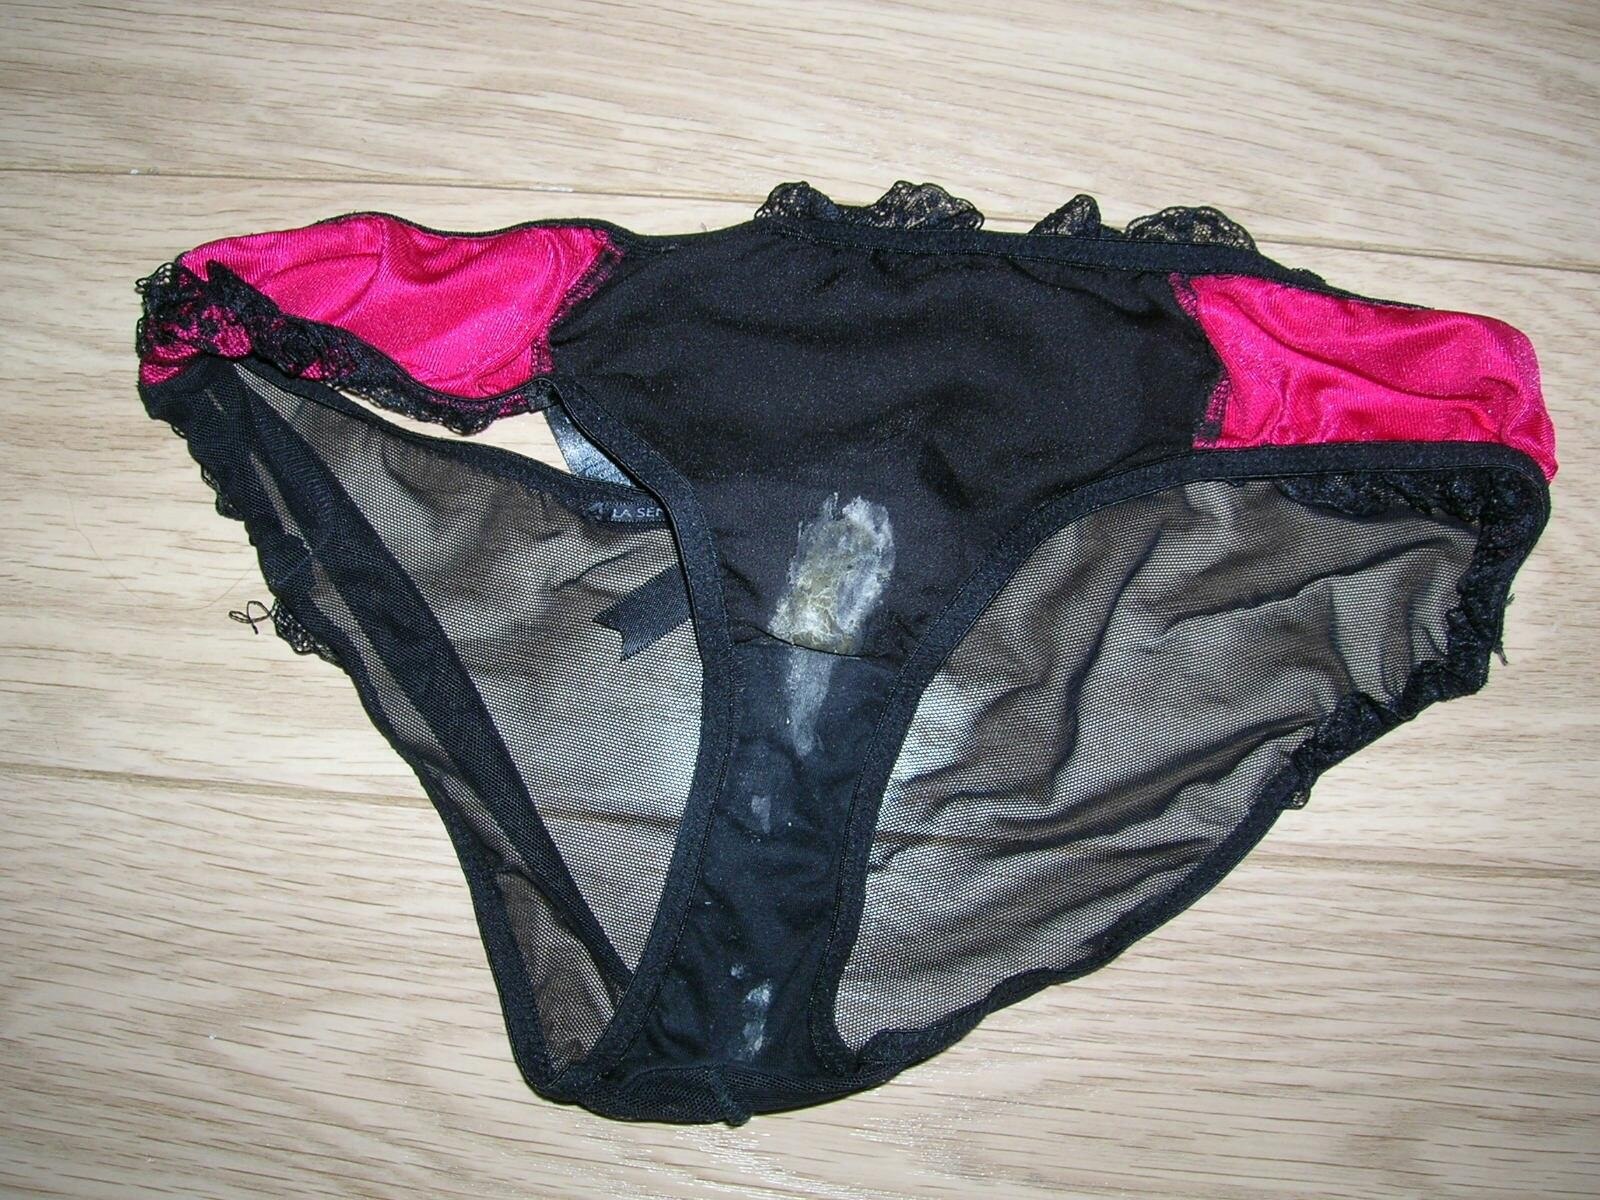 Photos Of Dirty Panties 5957 Hot Sex Picture